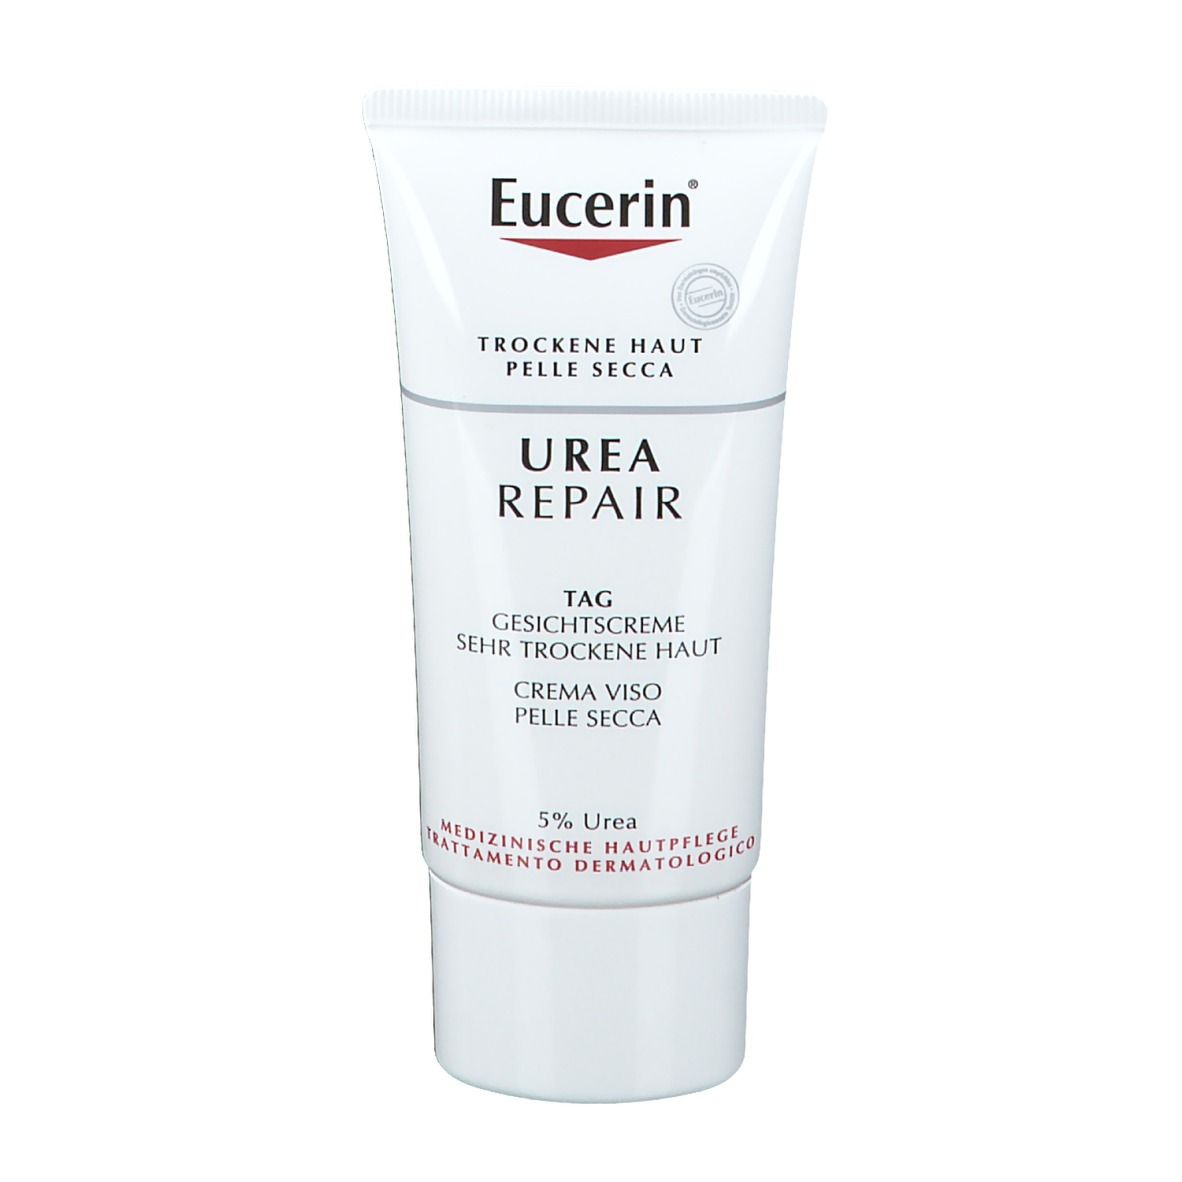 Eucerin® Urea Repair Tag Gesichtscreme 5% Urea